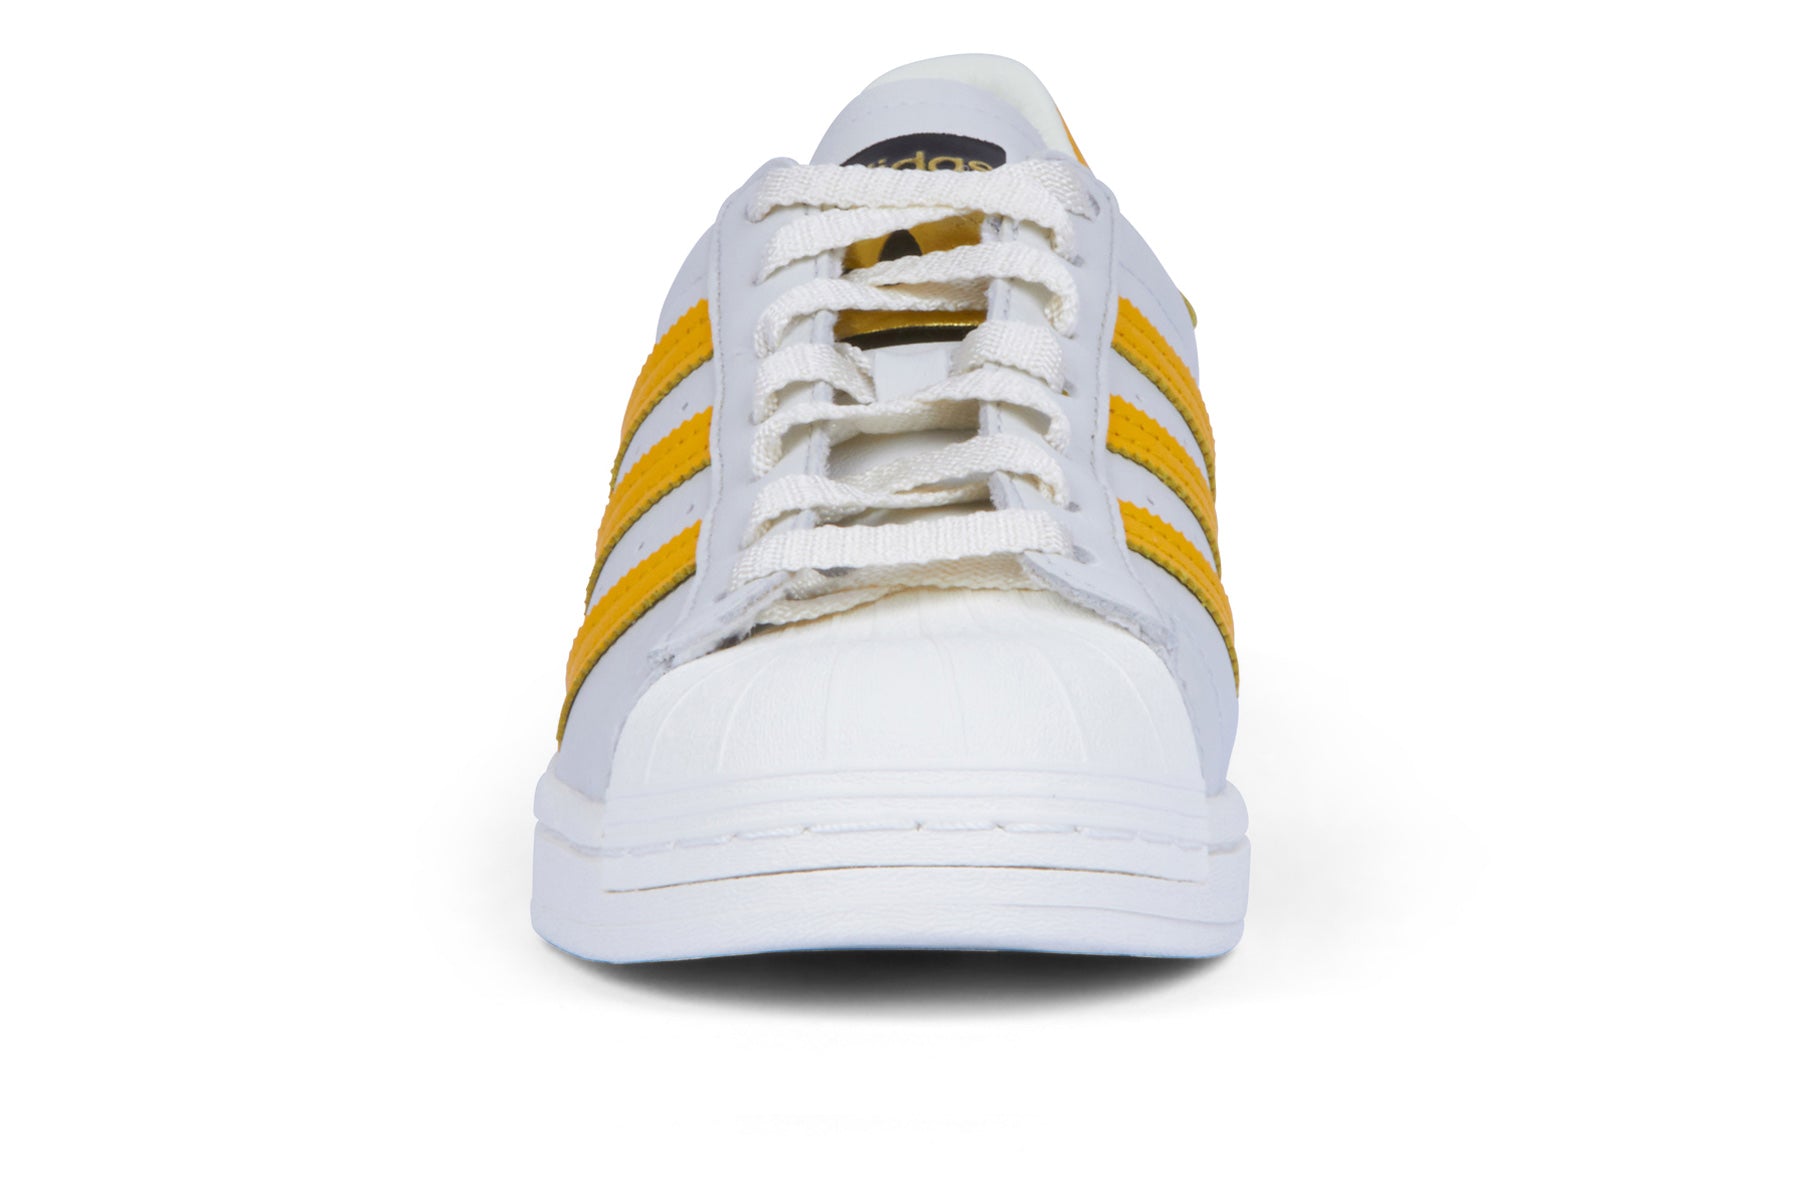 Adidas Superstar - Off White/Collegiate Gold/Off White